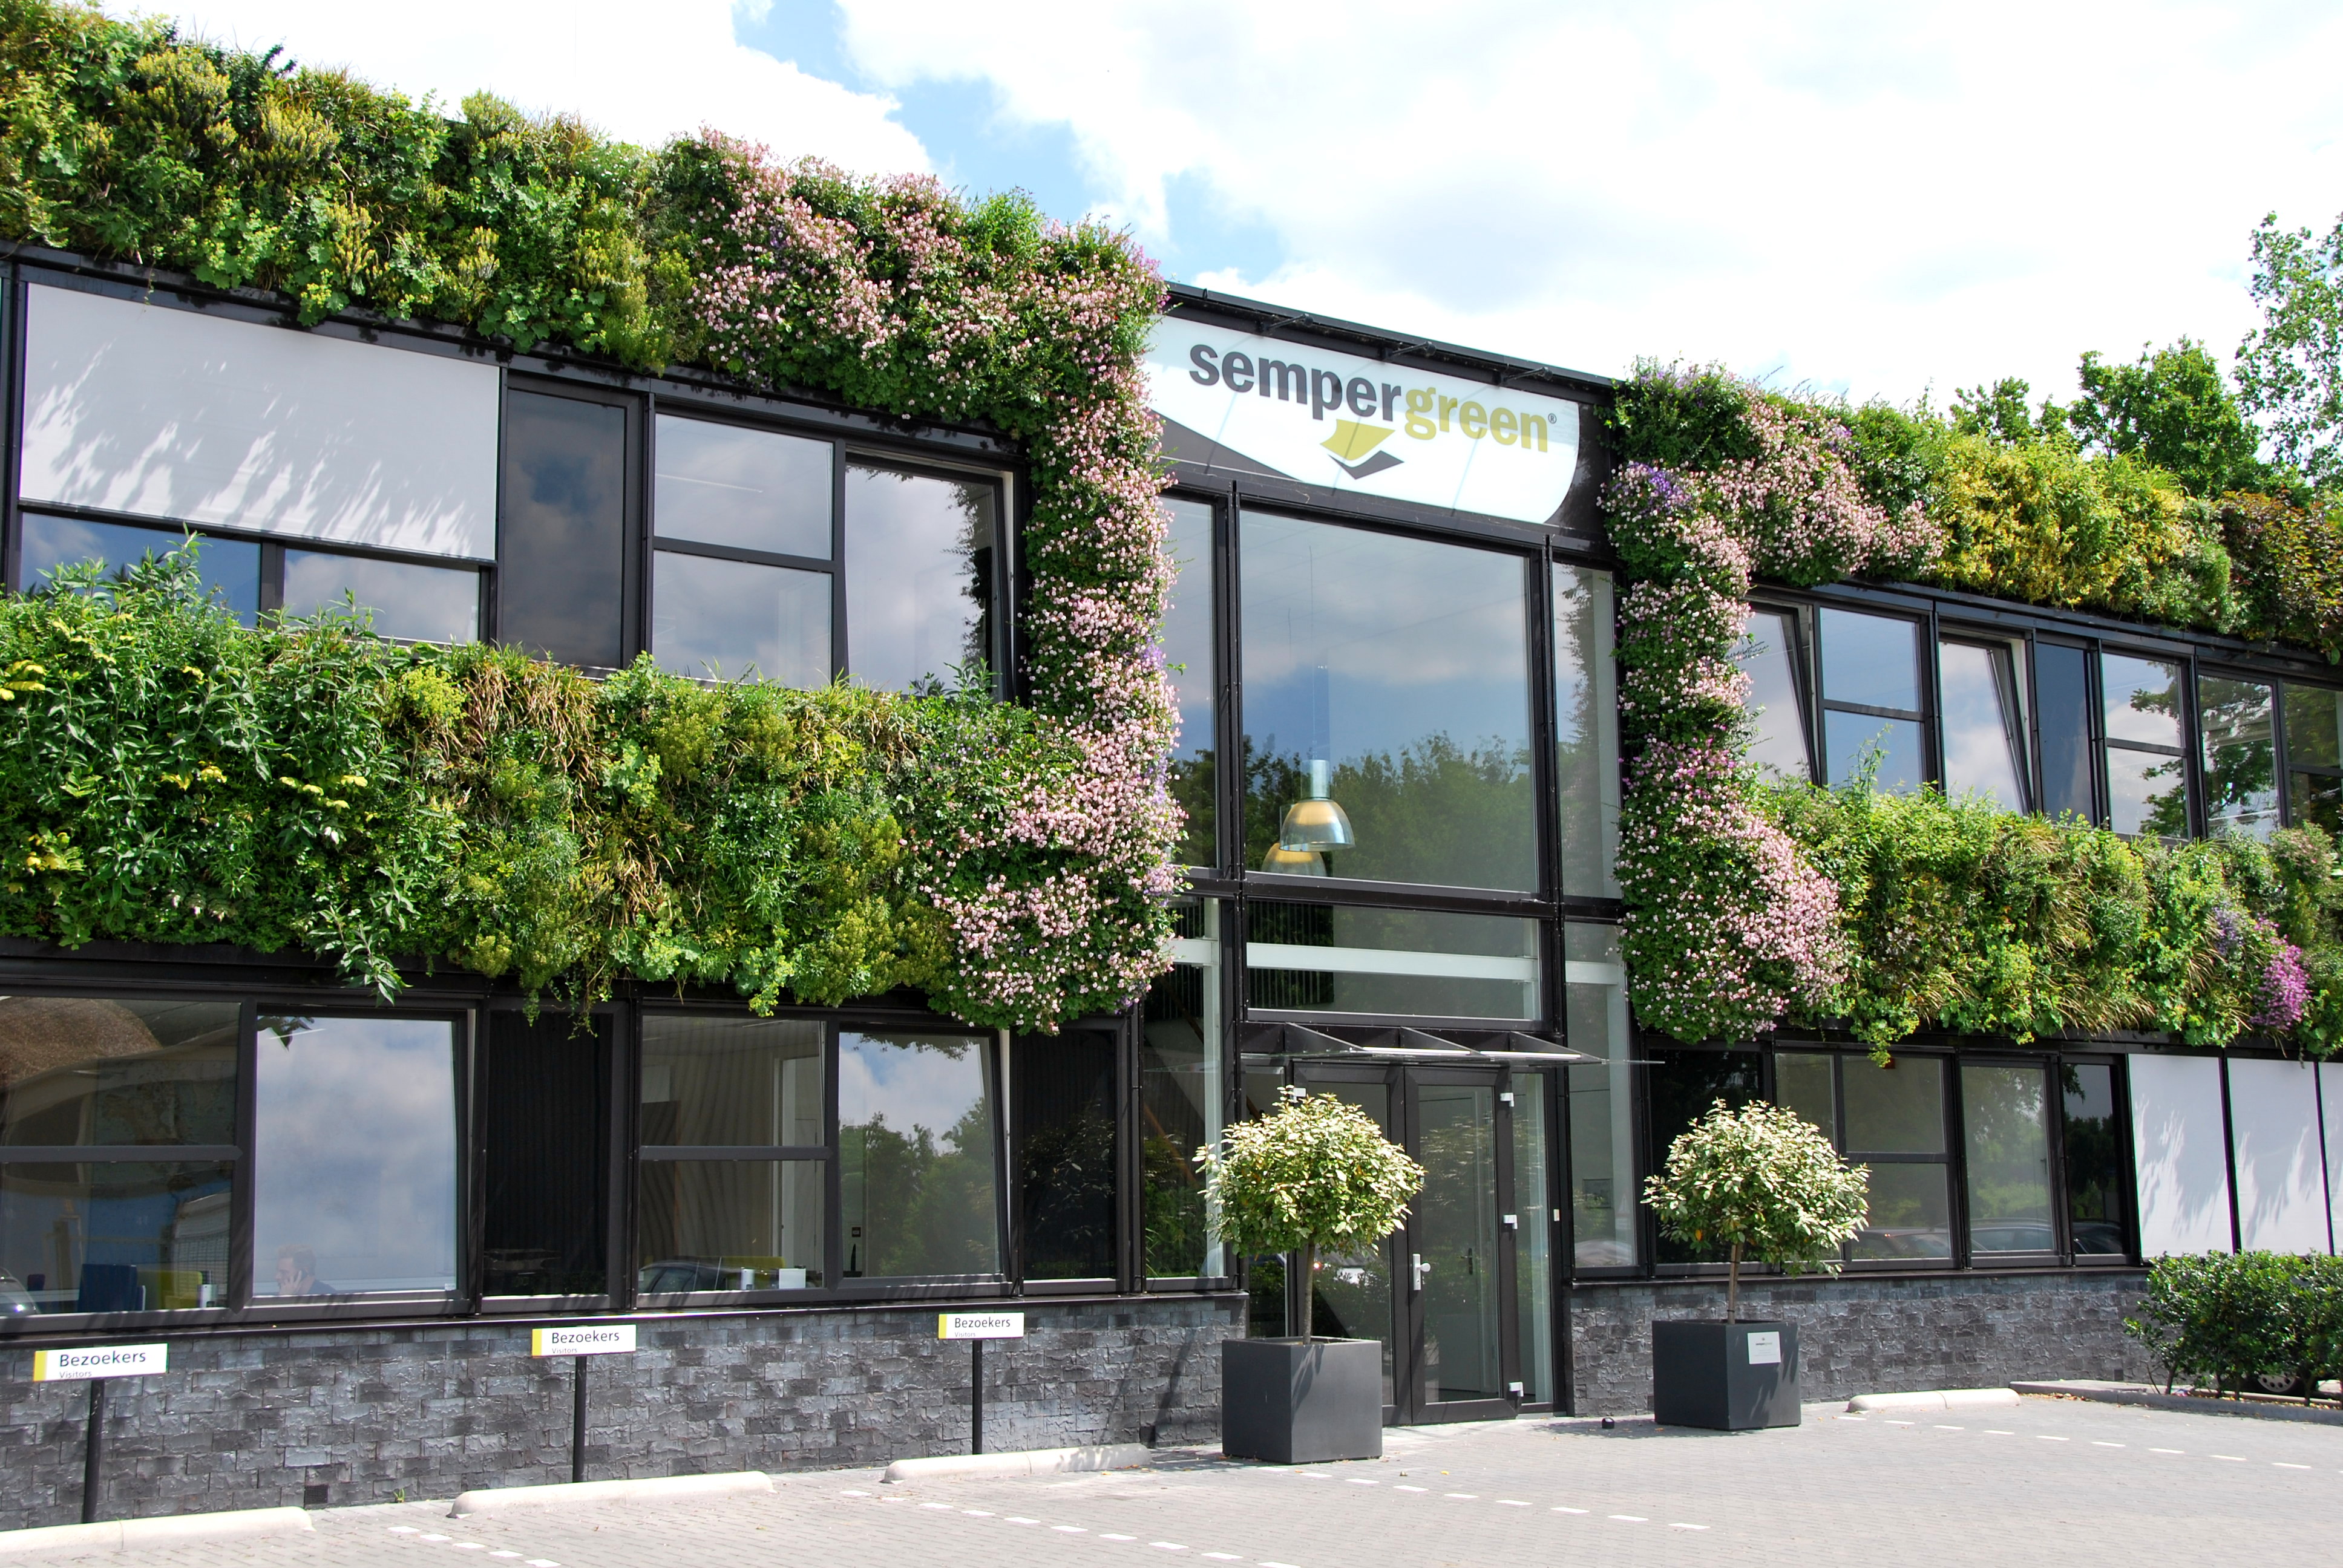 Sempergreen Headquarters in Odijk, Netherlands